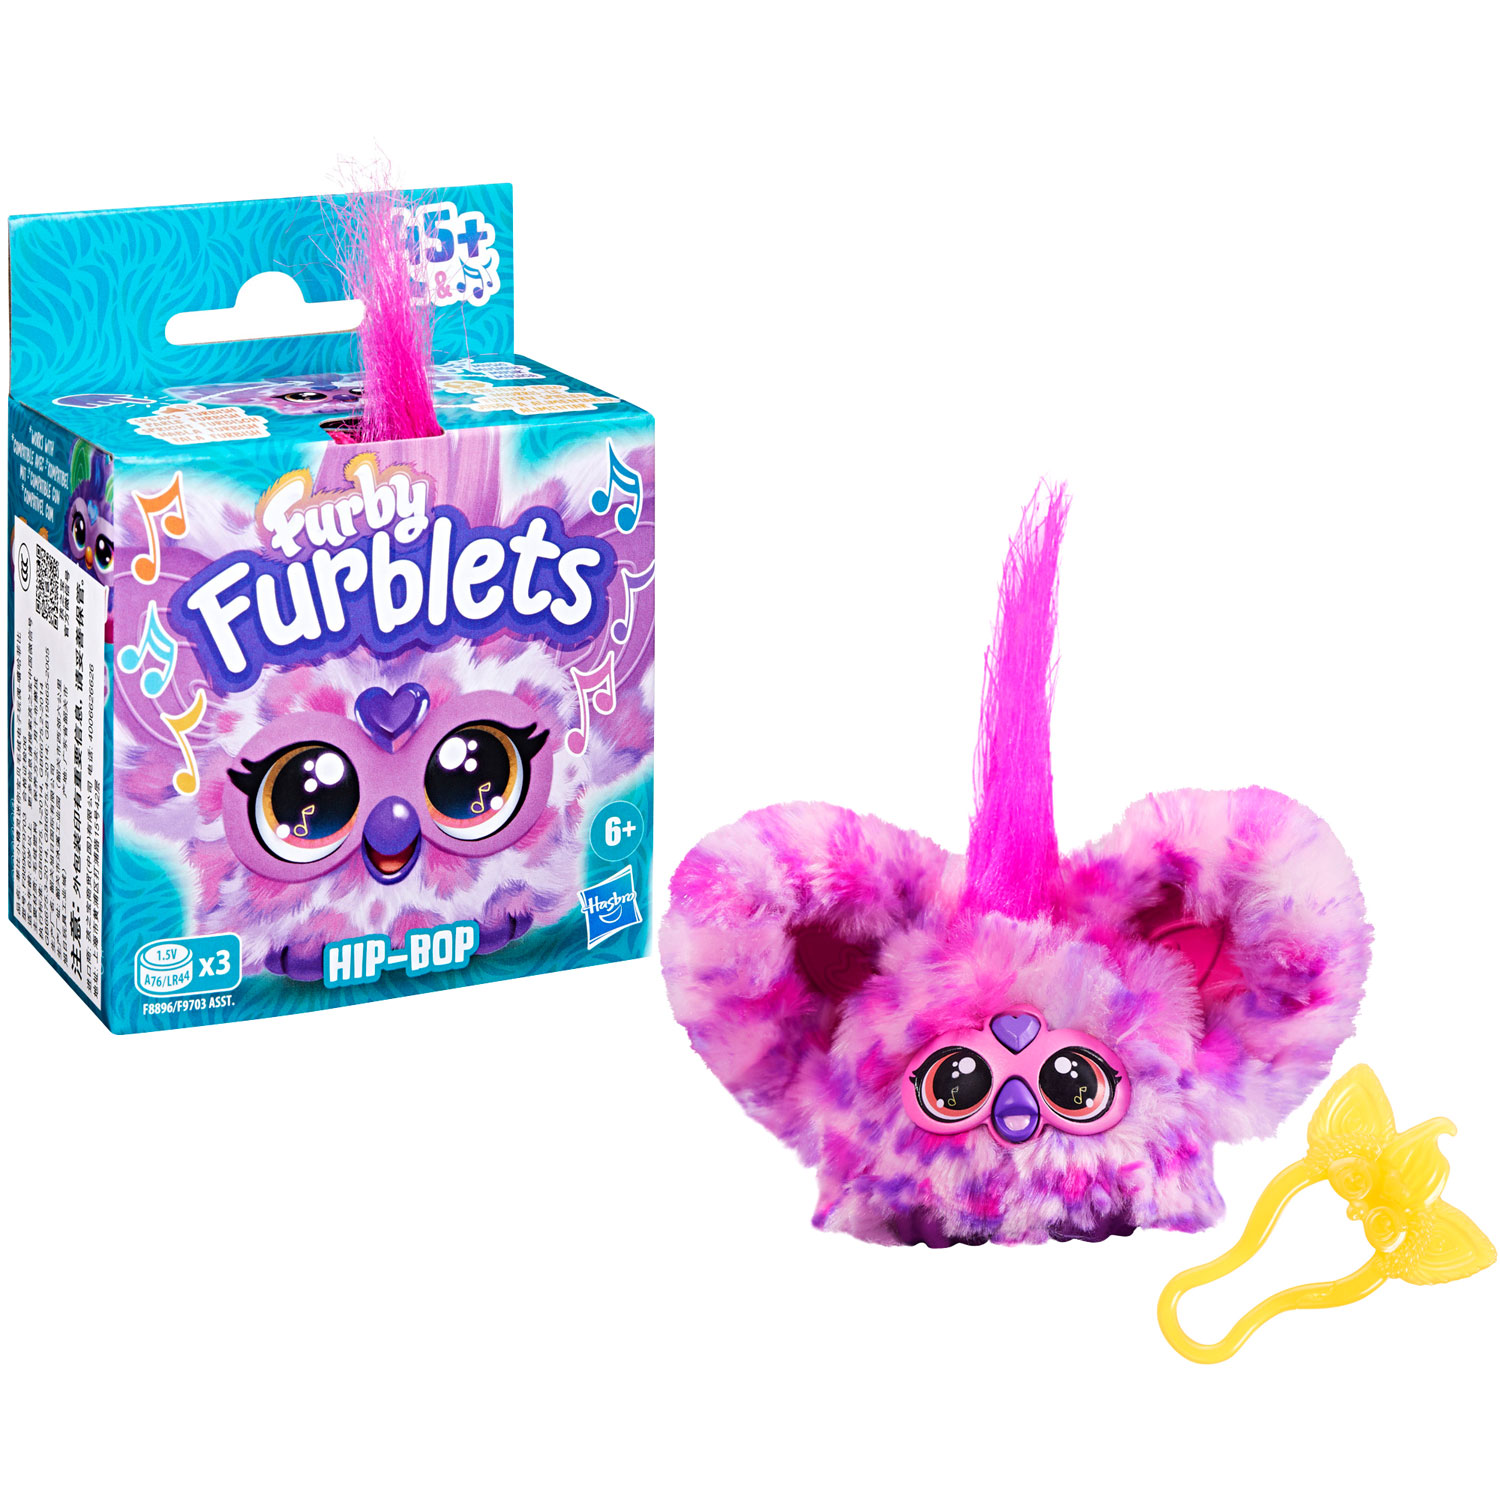 Hasbro Furby Furblets Hip-Bop Electronic Plush Toy